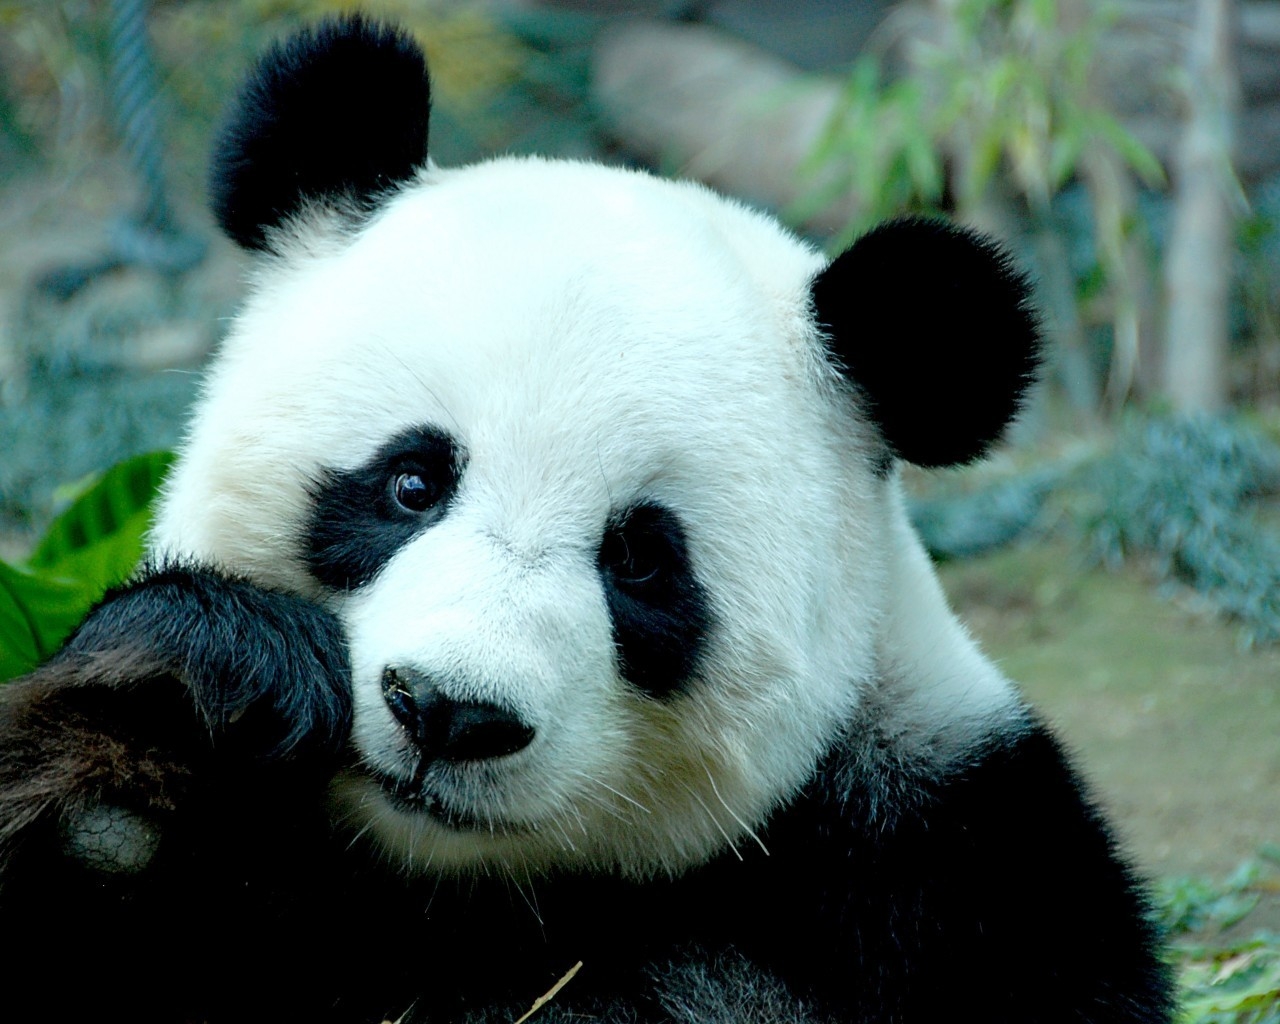 Sad Panda Bear for 1280 x 1024 resolution